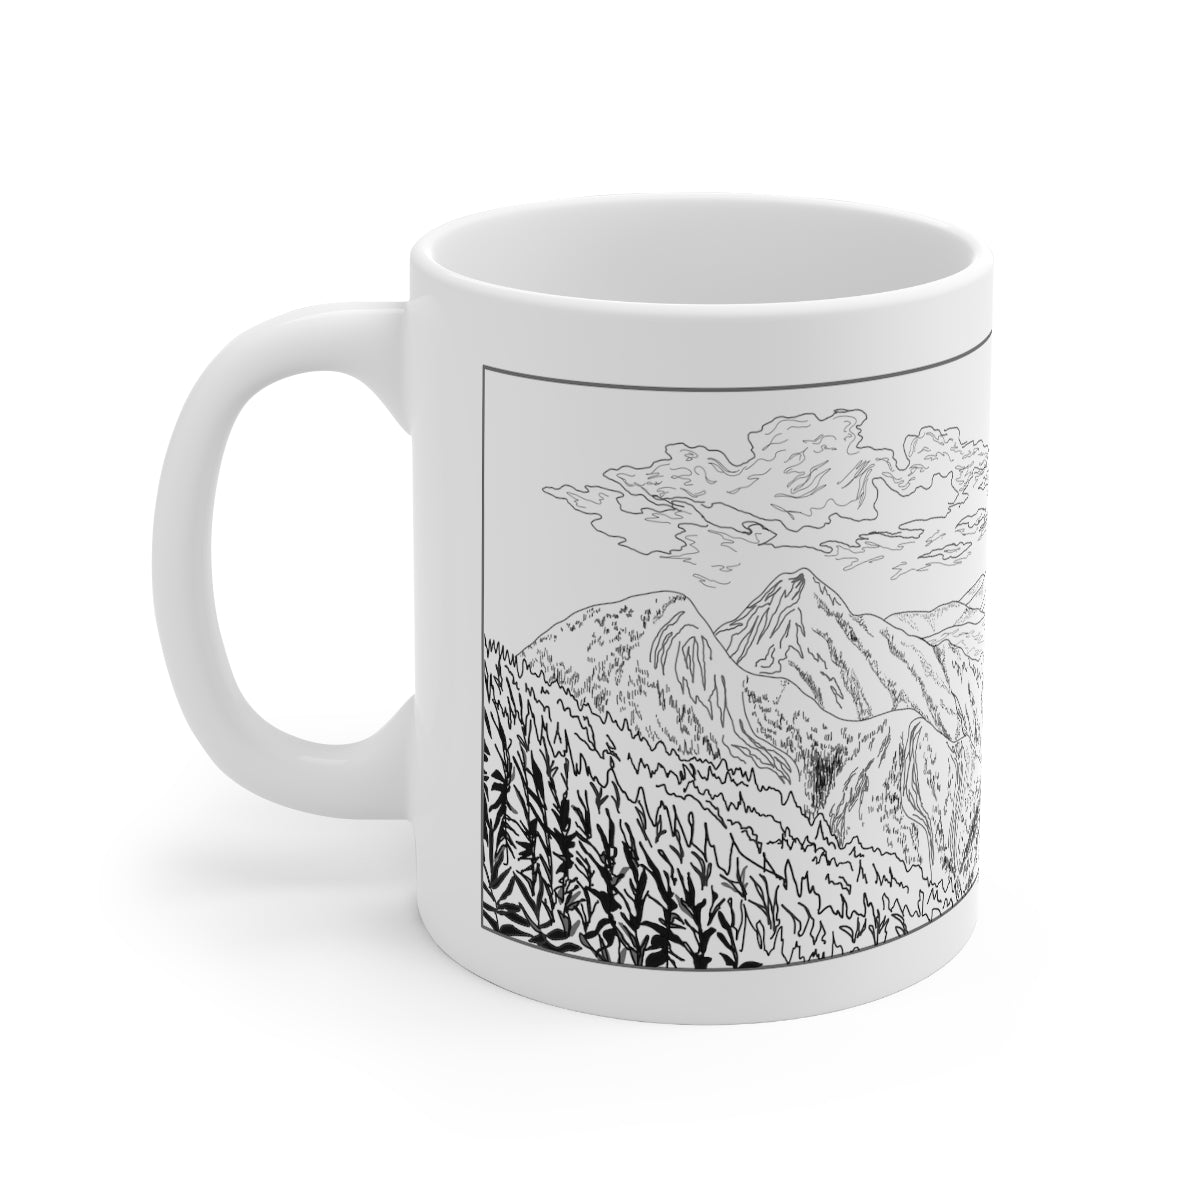 Billowing Mountain Forest Illustration Mug